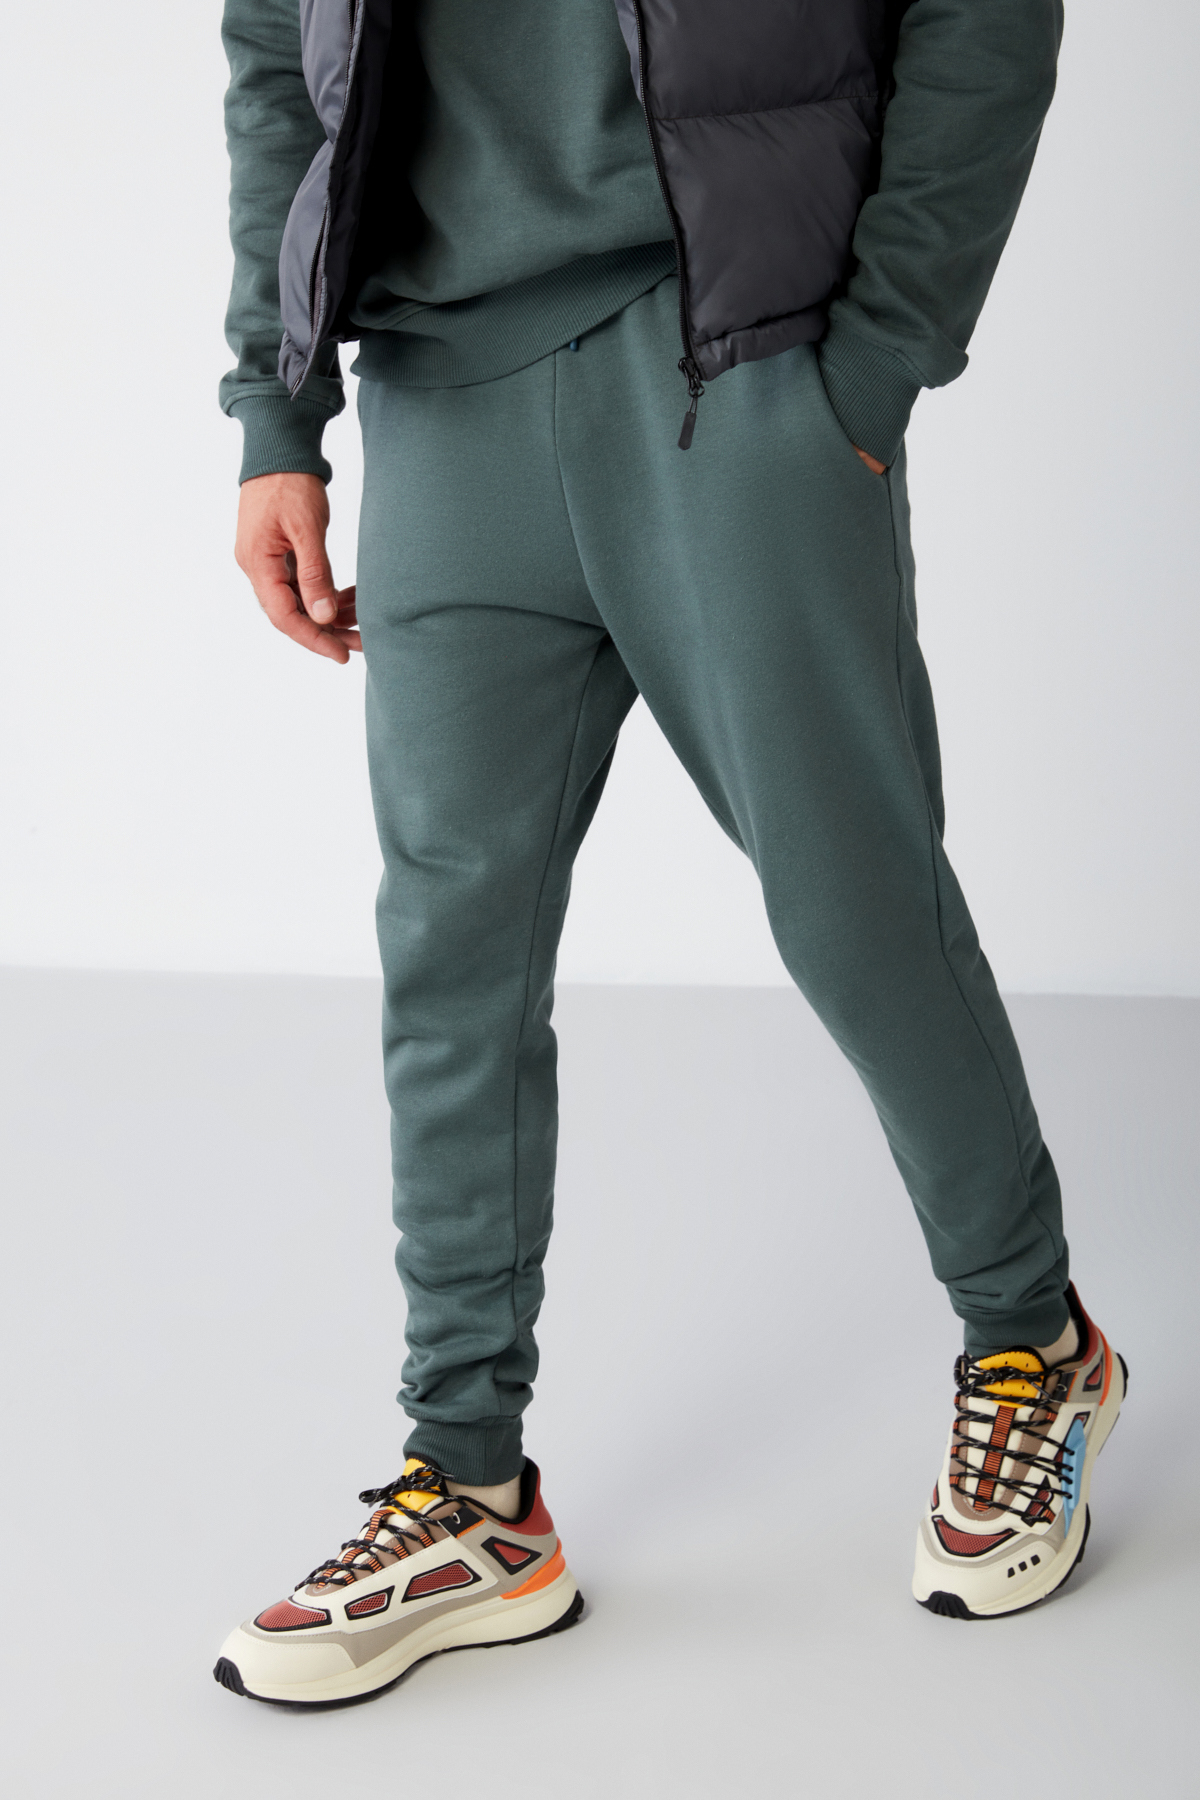 Levně GRIMELANGE Jeremiah Men's Regular Leg Elastic Fabric Waist Cord And Elastic Pocket Green Sweatpants